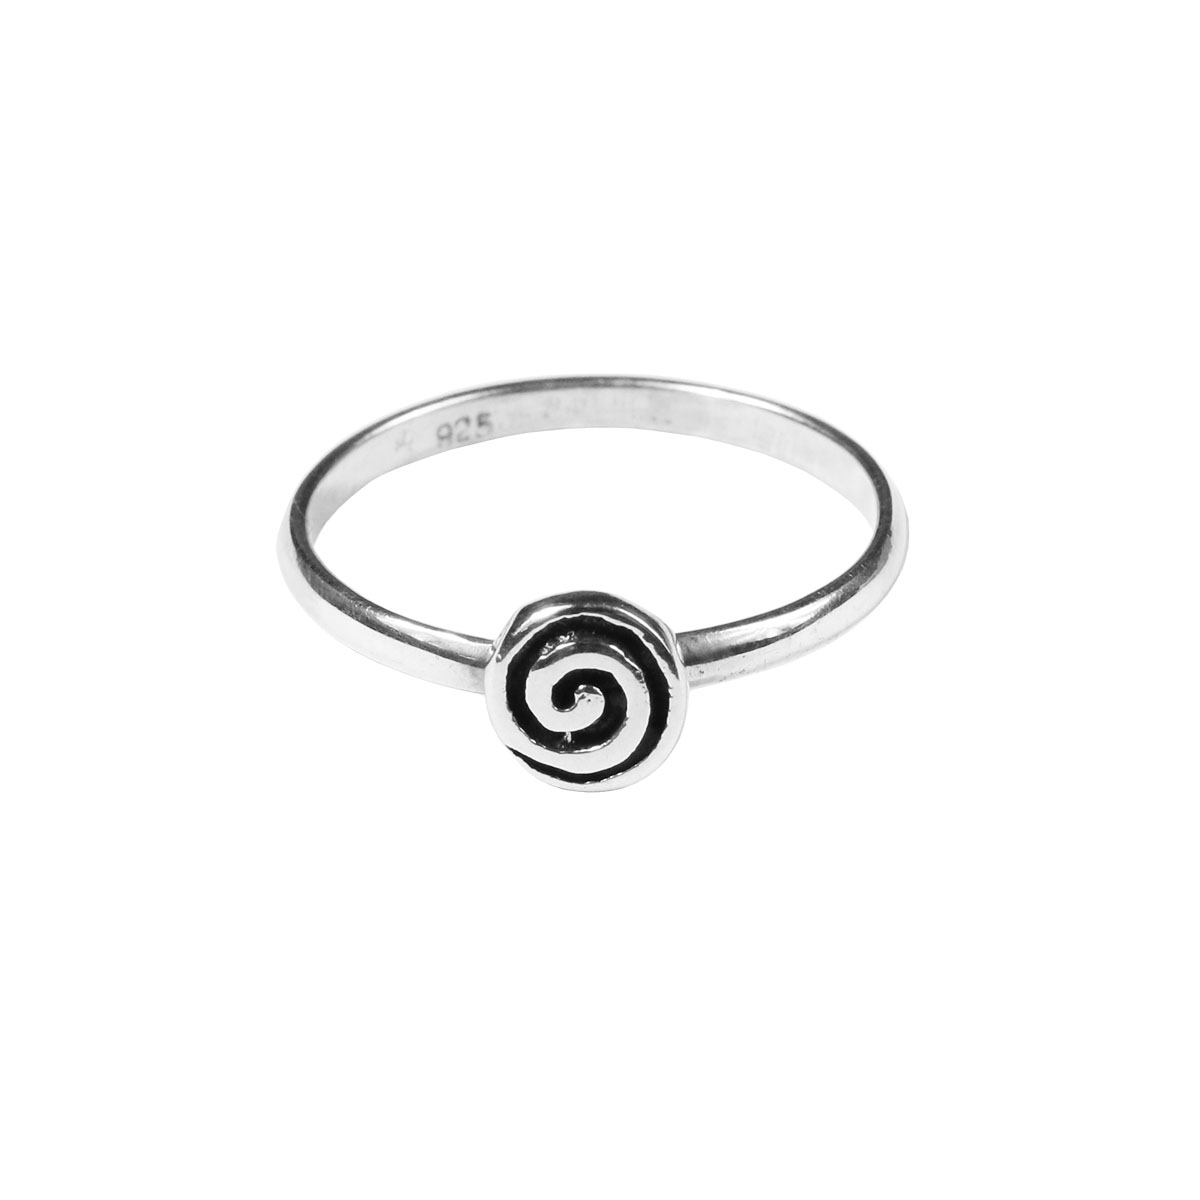 Handcrafted Sterling Silver Ring - Modern Spiral | NOVICA